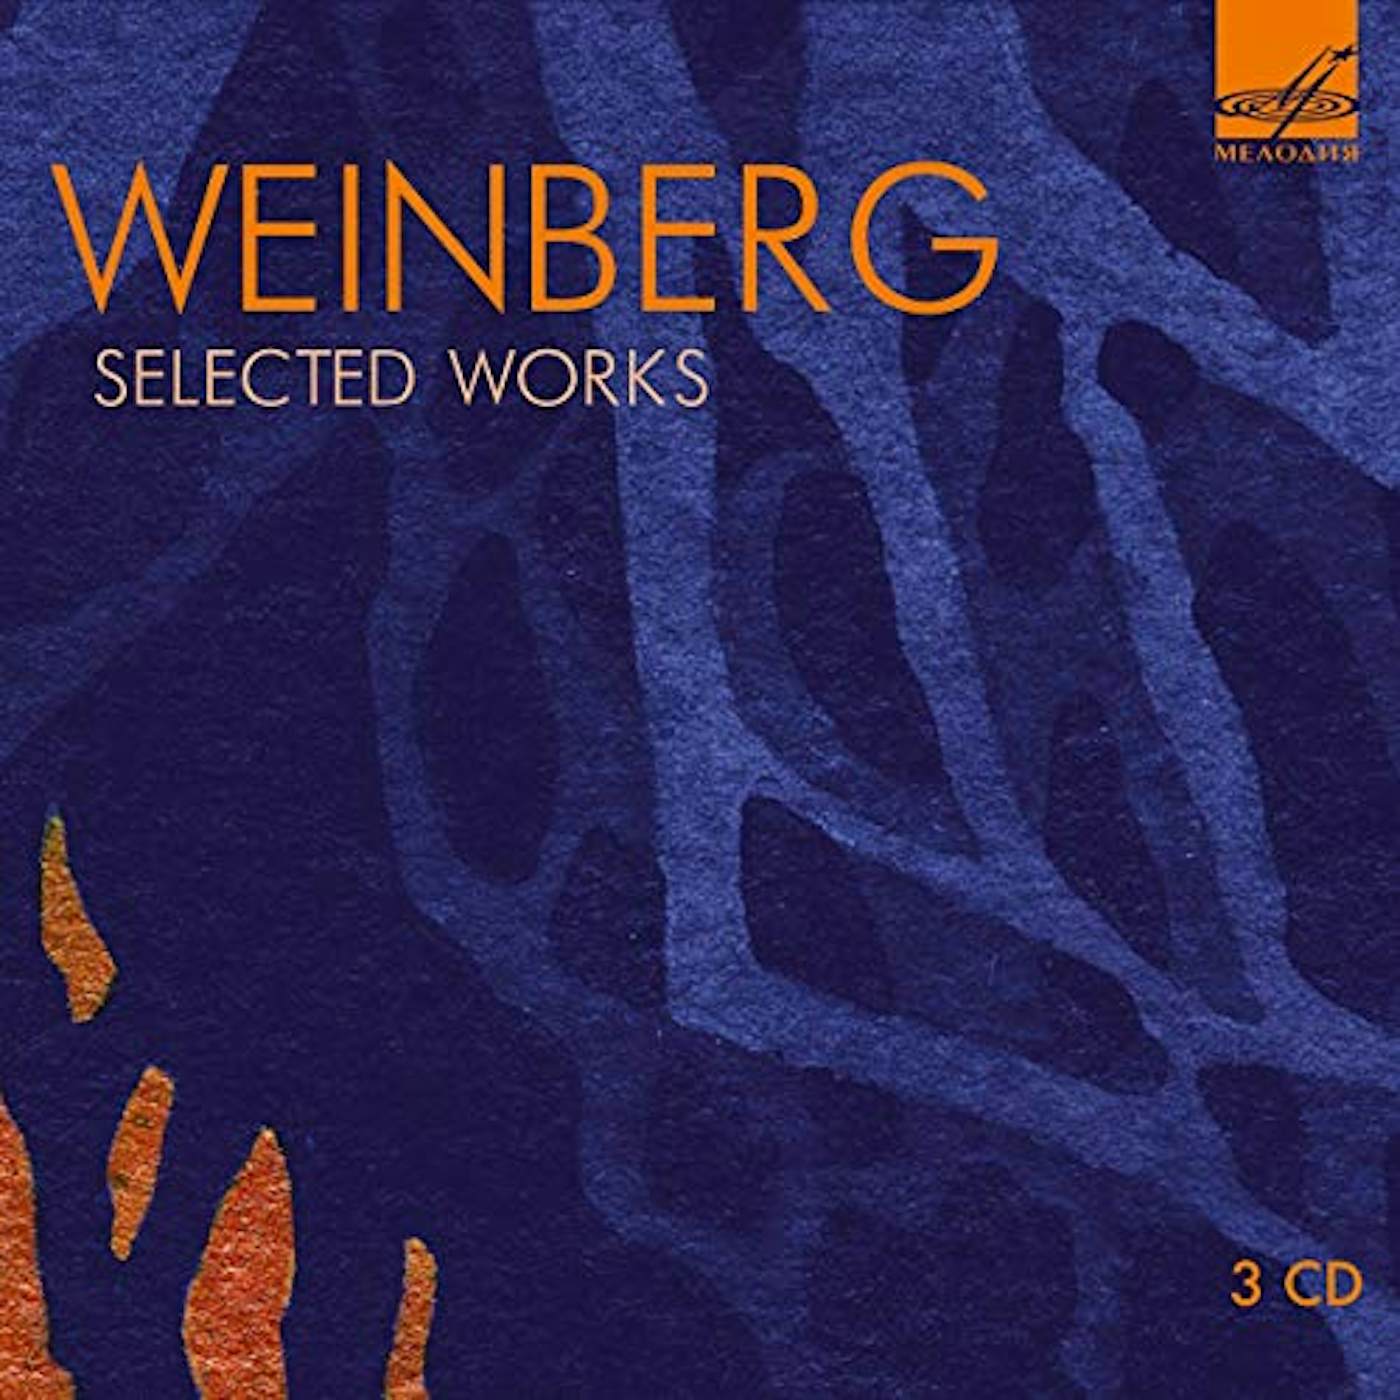 Weinberg SELECTED WORKS CD